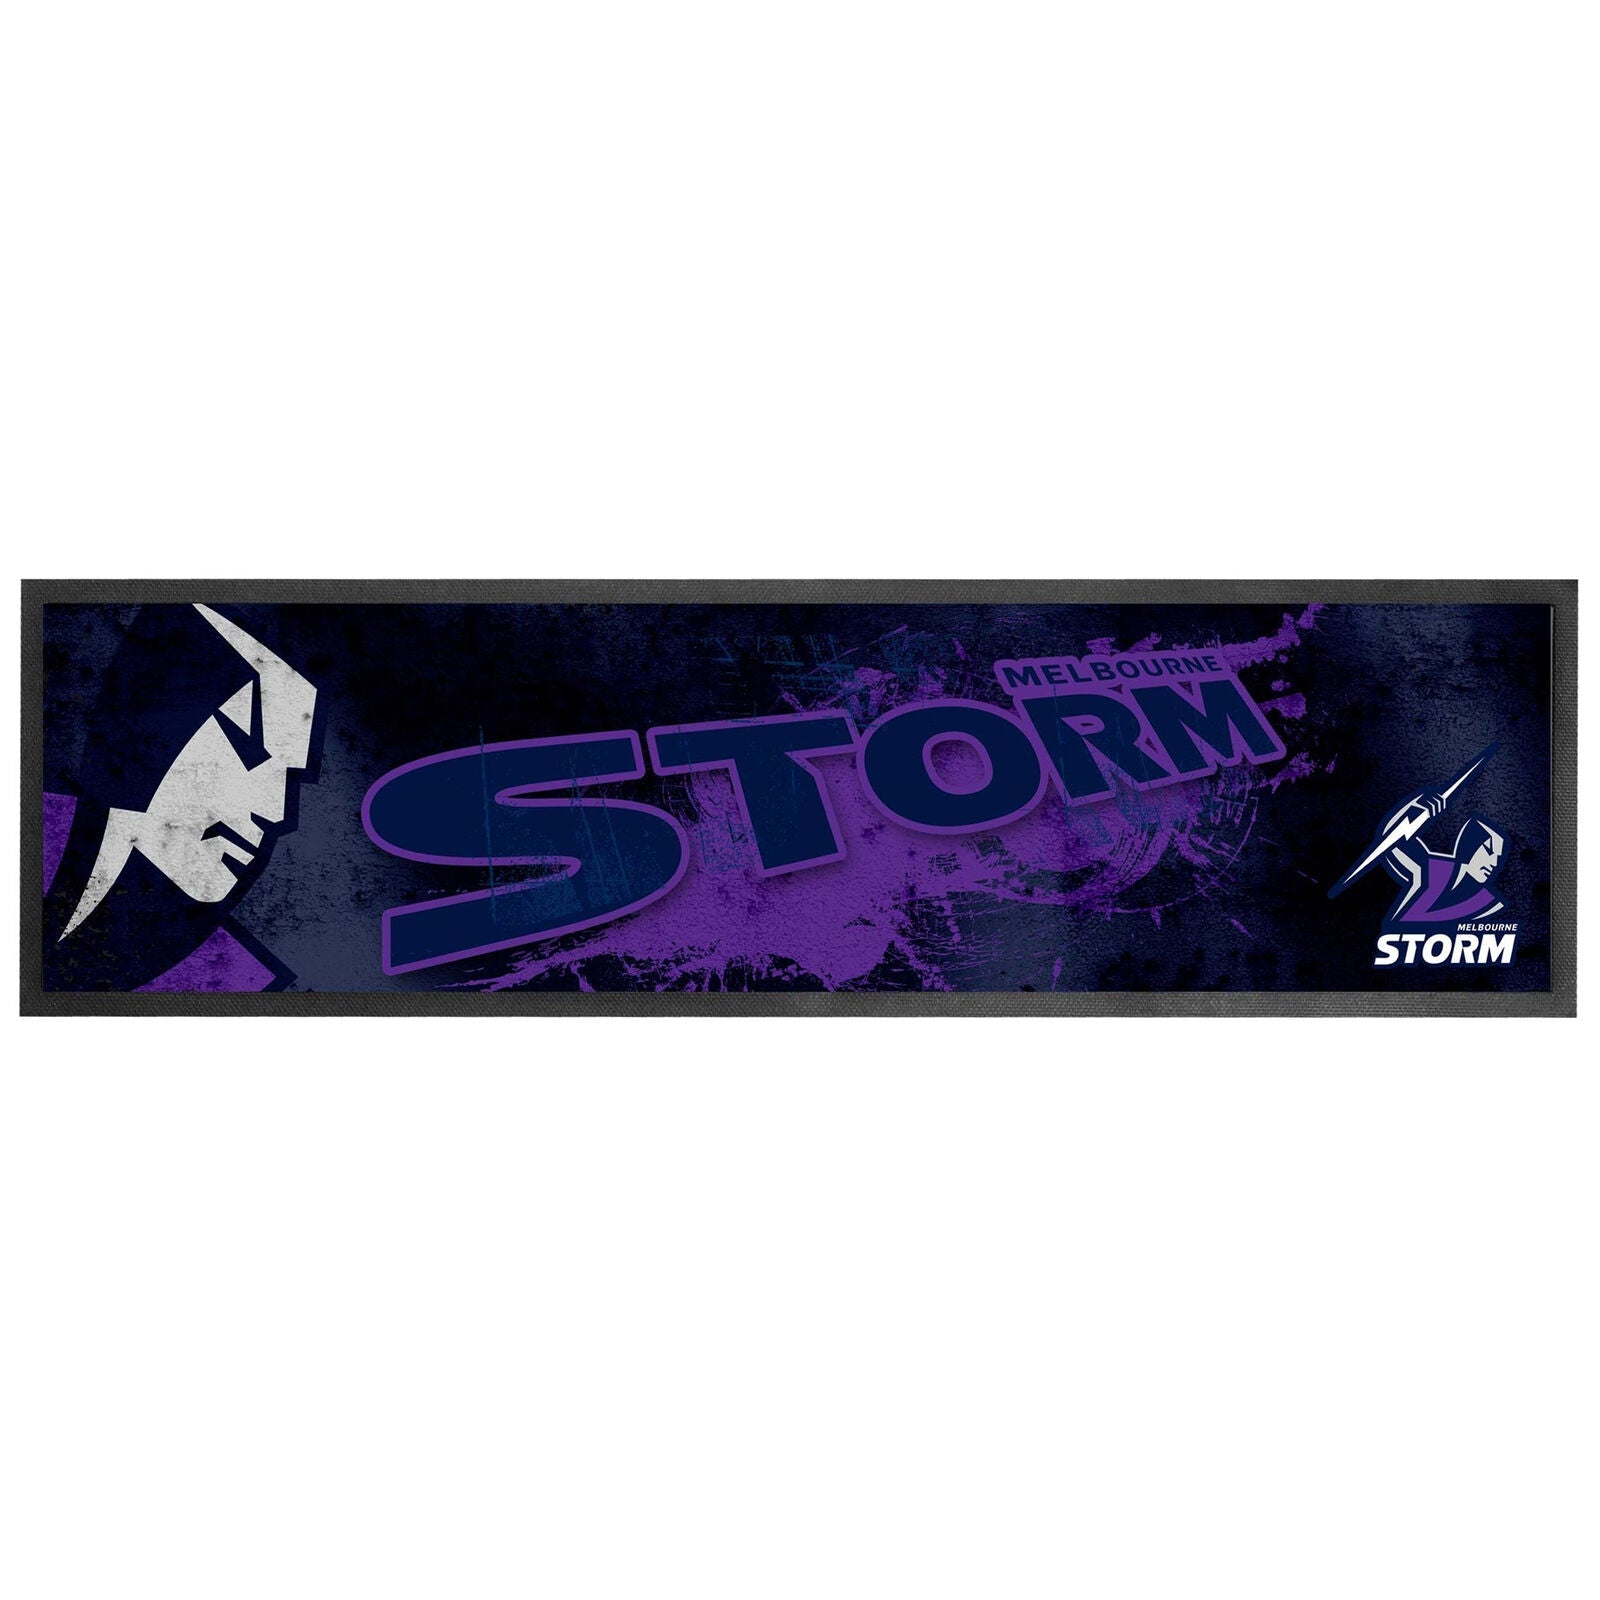 Melbourne Storm NRL Premium Rubber-Backed Bar Mat Runner - KING CAVE